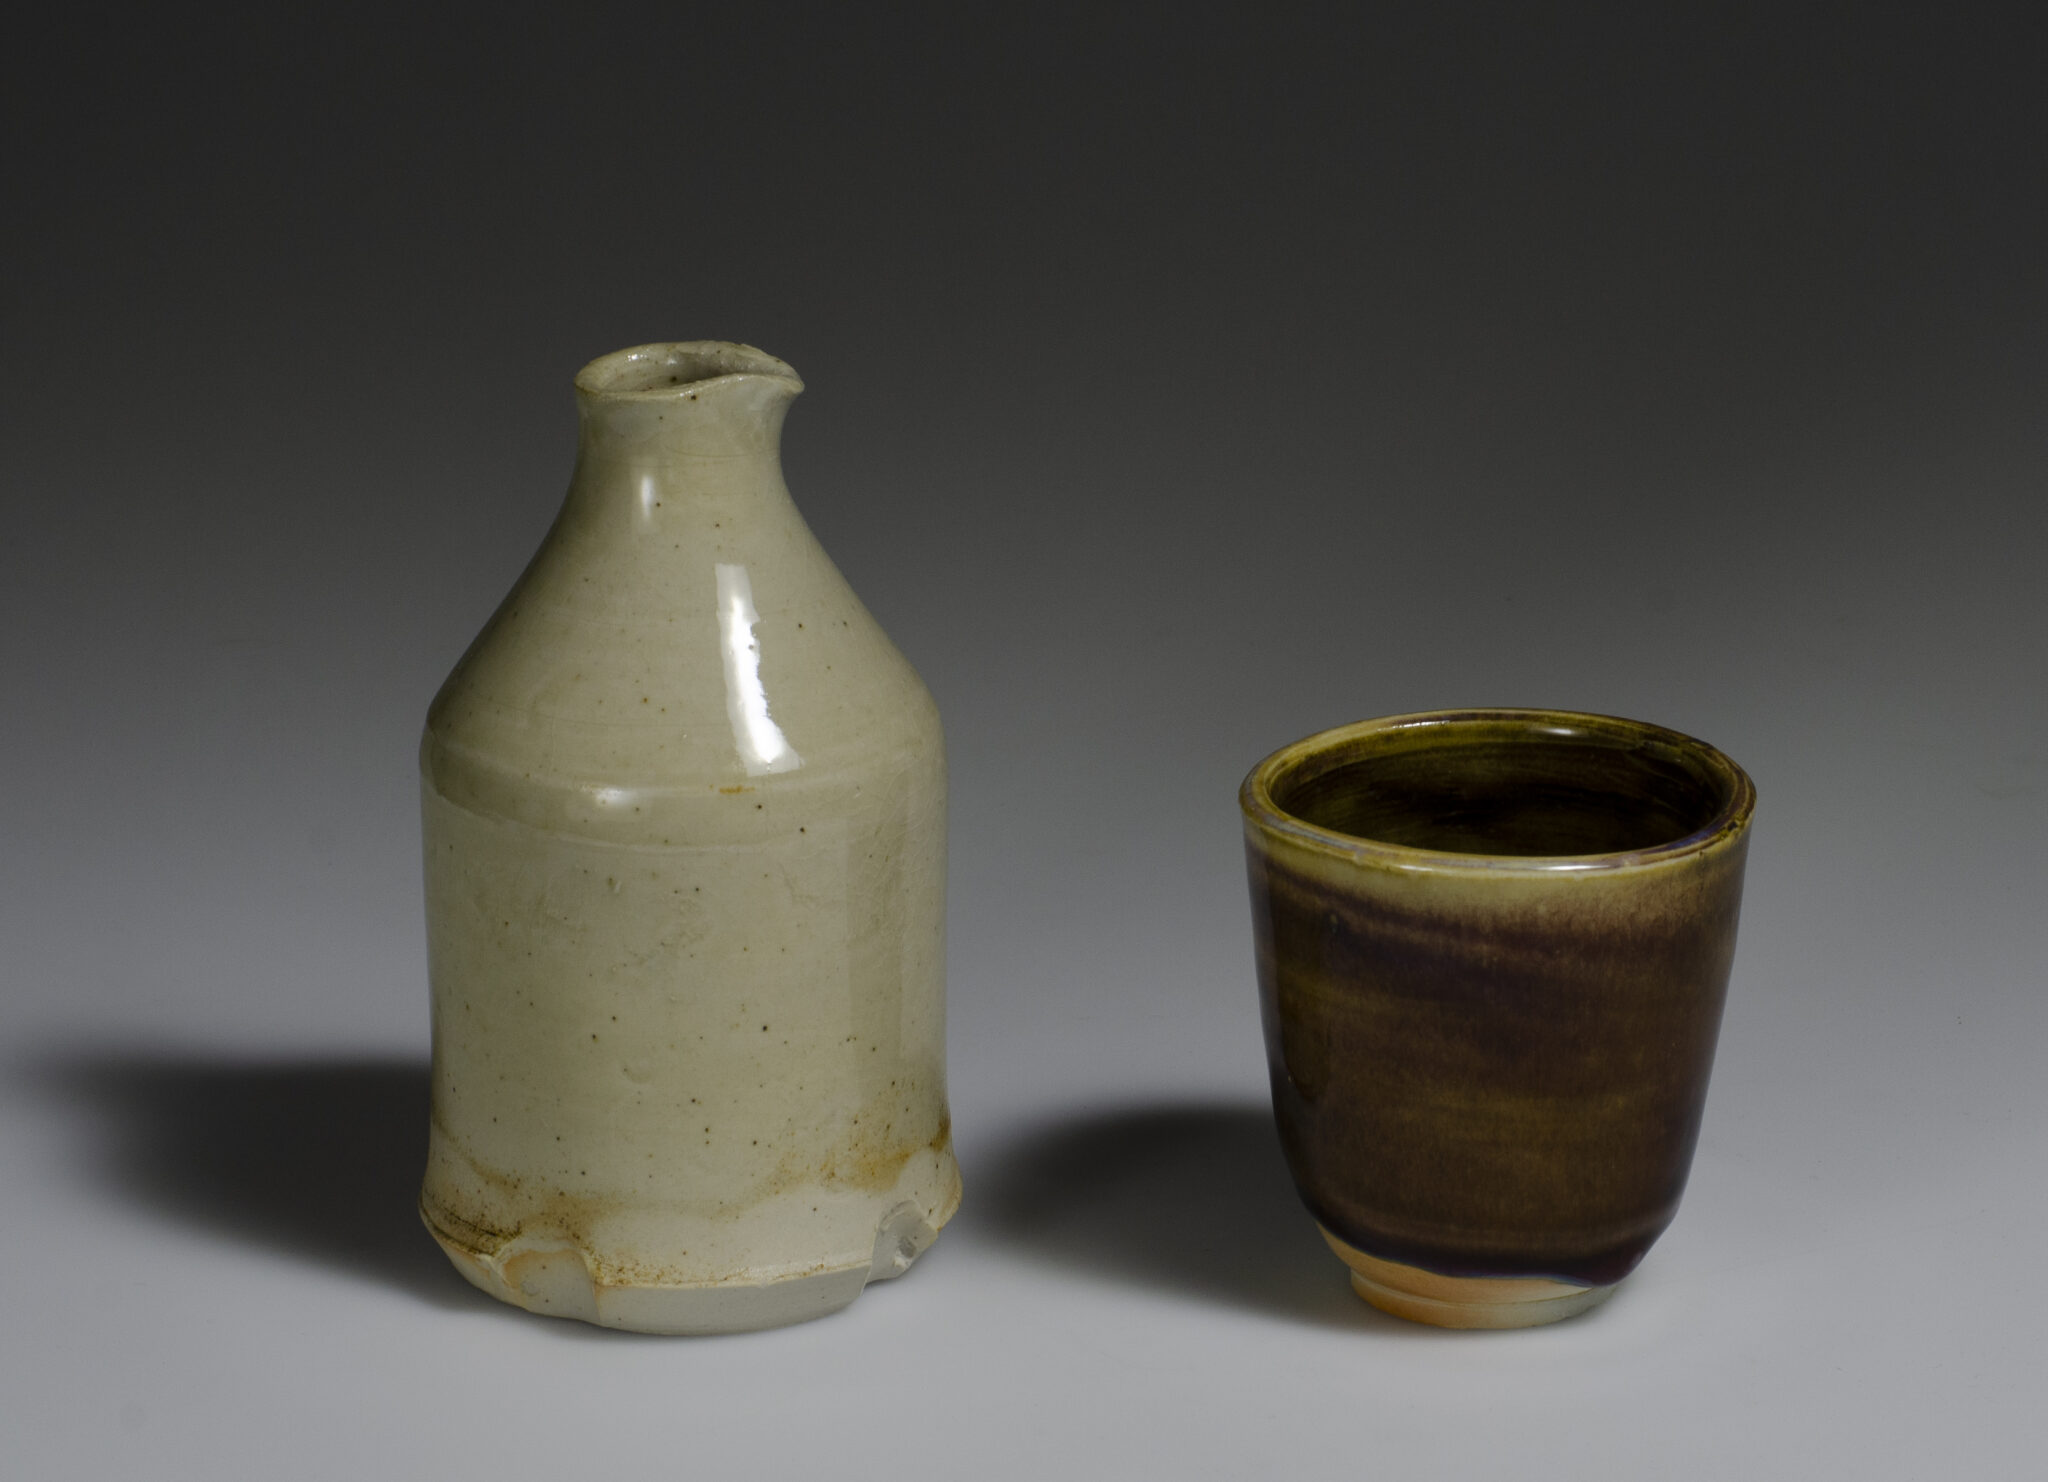 wood fired white porcelain pitcher with pale glaze, tea bowl with with dark auburn glaze